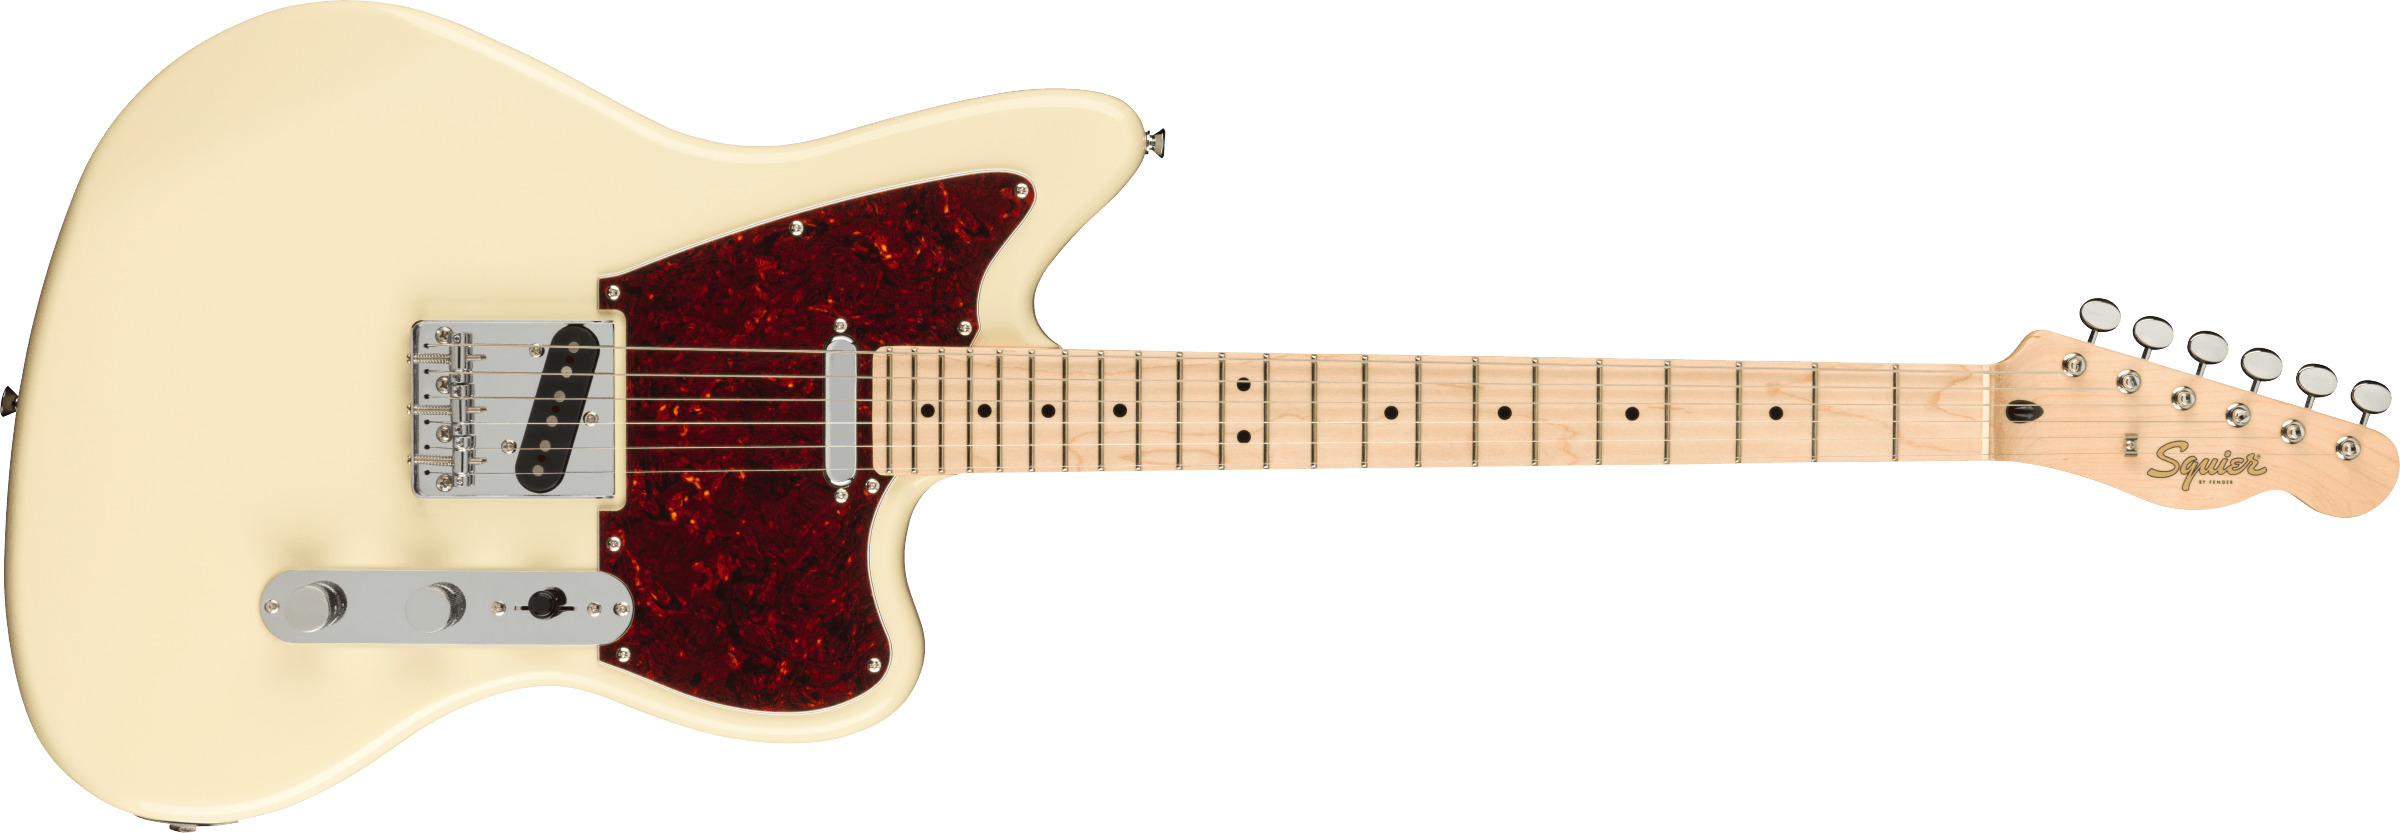 Se Fender Squier Paranormal Offset Telecaster El-guitar (Olympic White) hos Drum City